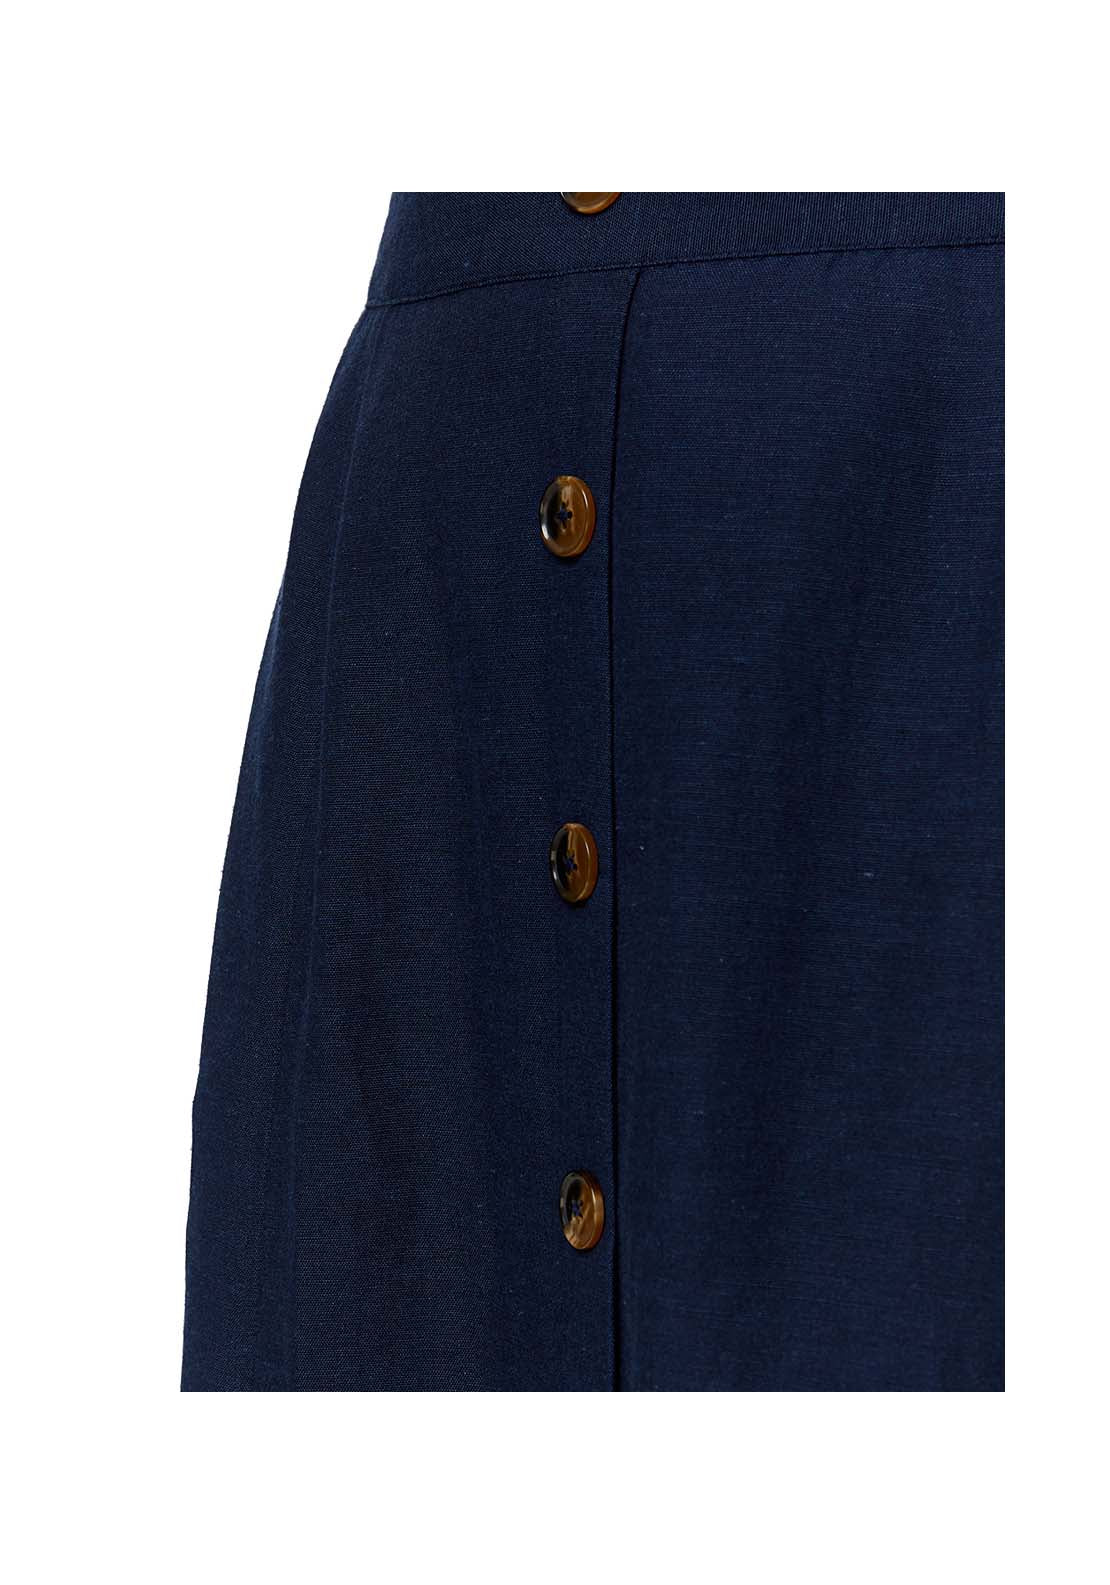 Tigiwear French Navy Linen Skirt 6 Shaws Department Stores